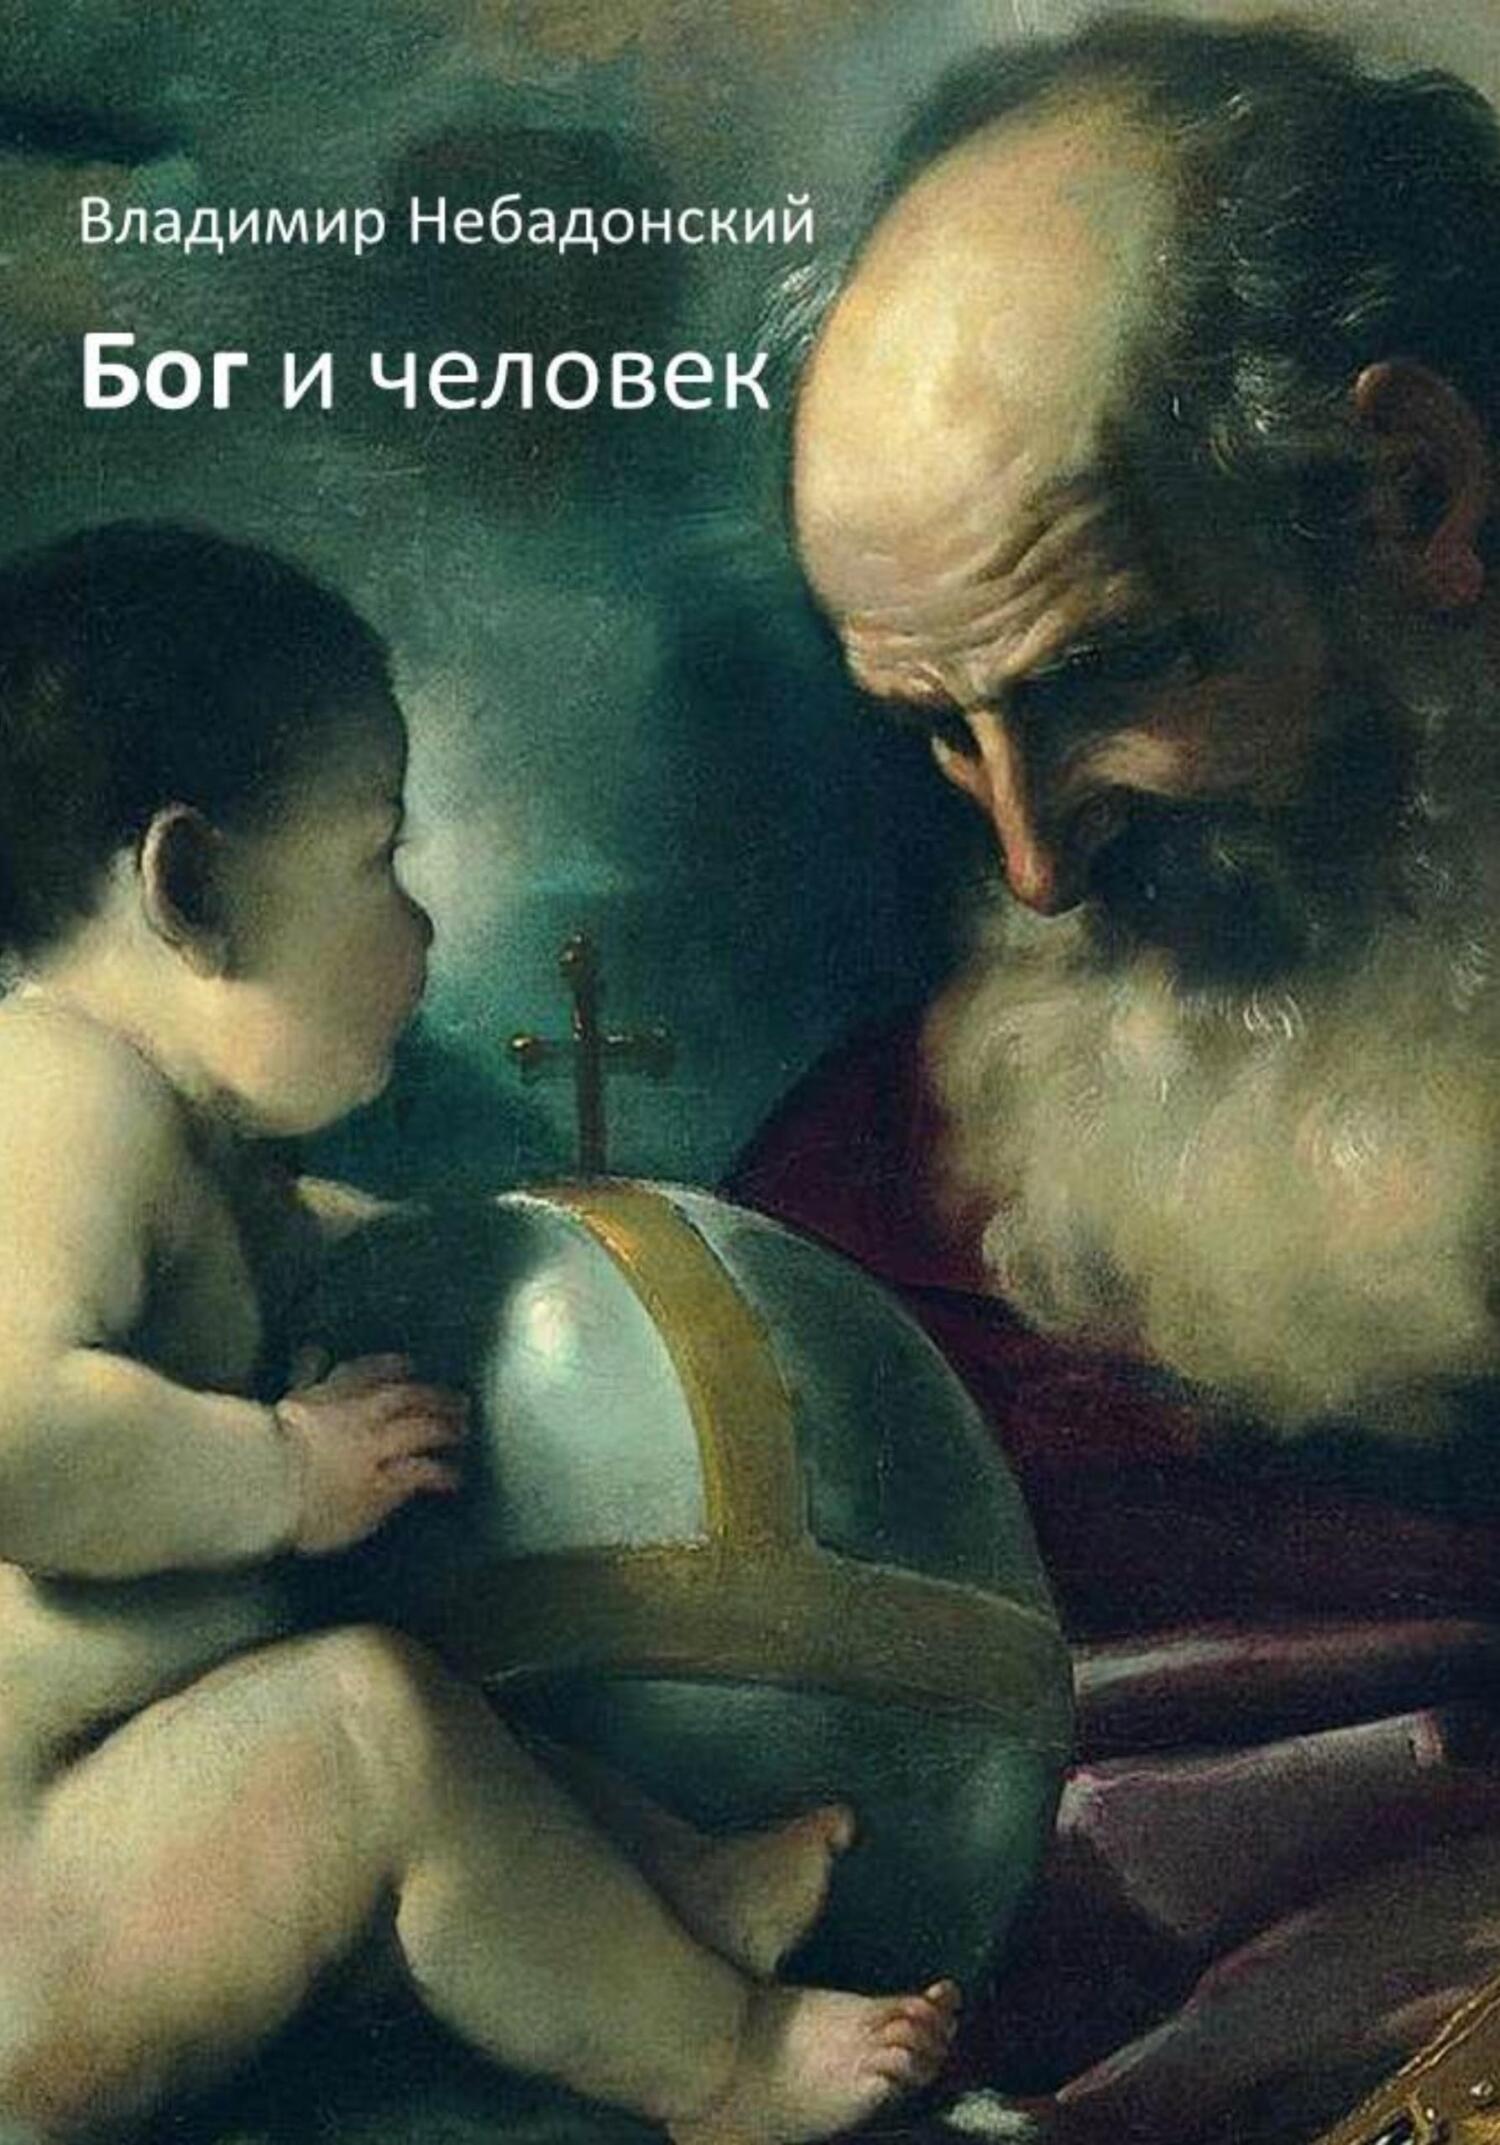 Бог и человек - Владимир Небадонский